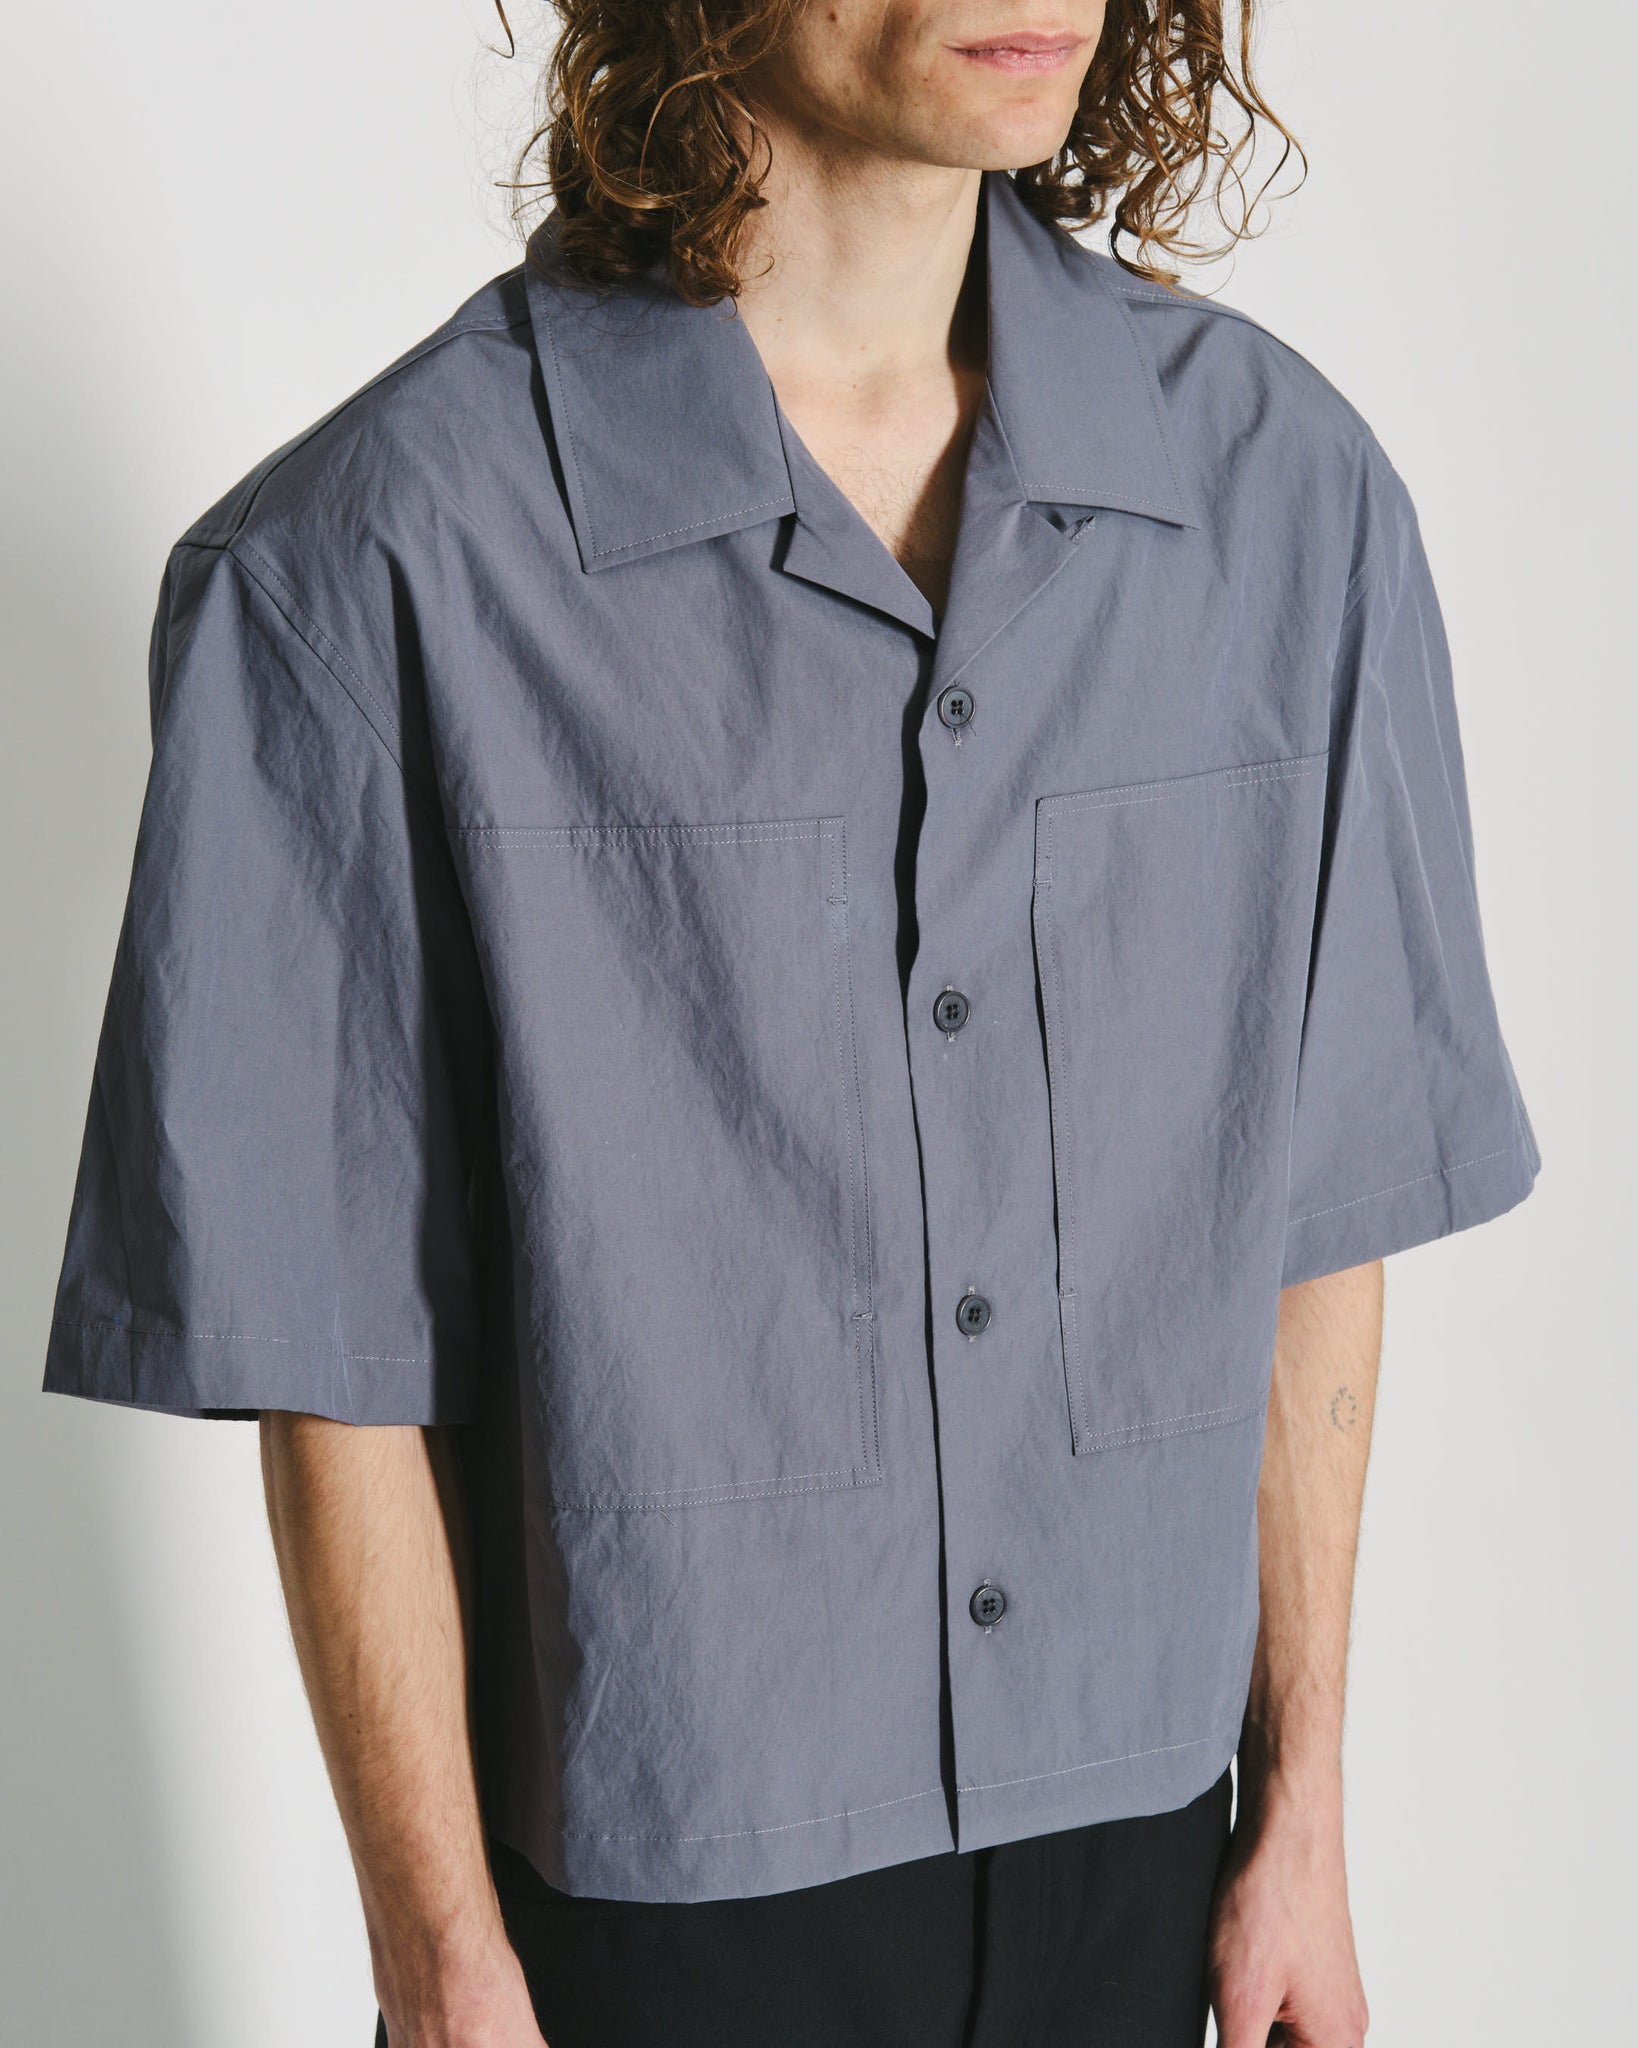 Pocket Half Shirt - Charcoal